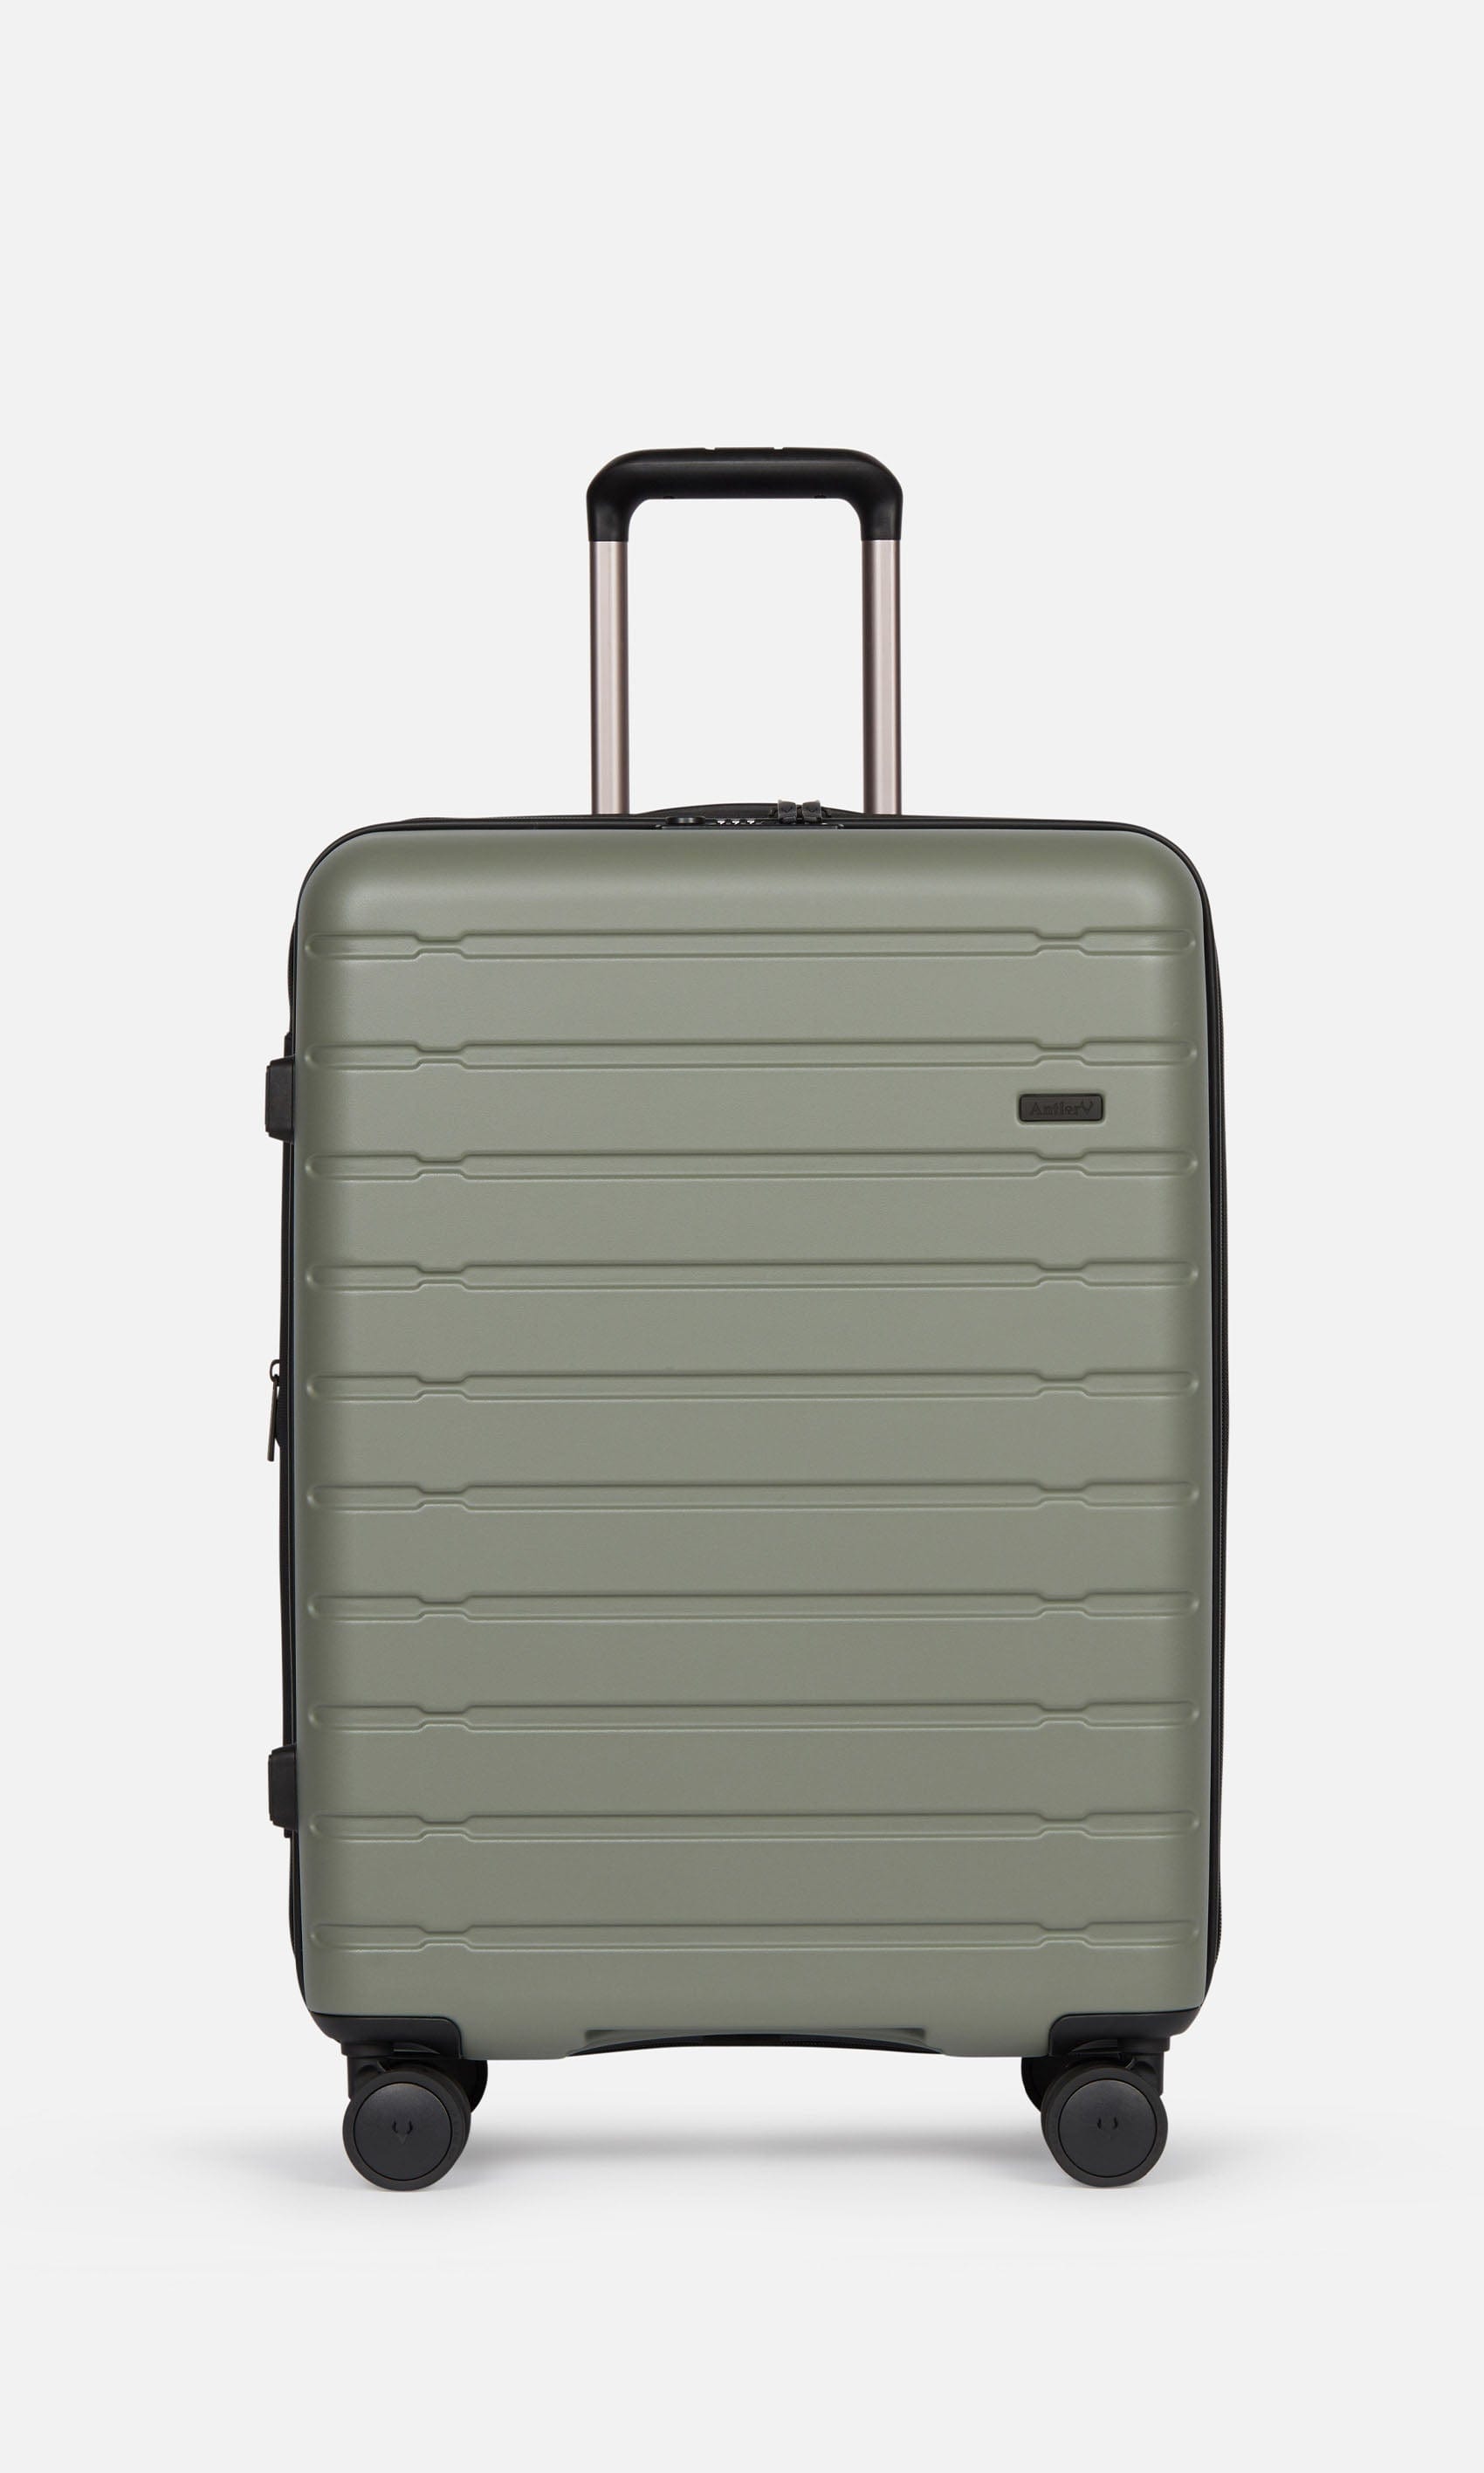 View Antler Stamford Medium Suitcase In Khaki Size 683 x 48 x 295 cm information